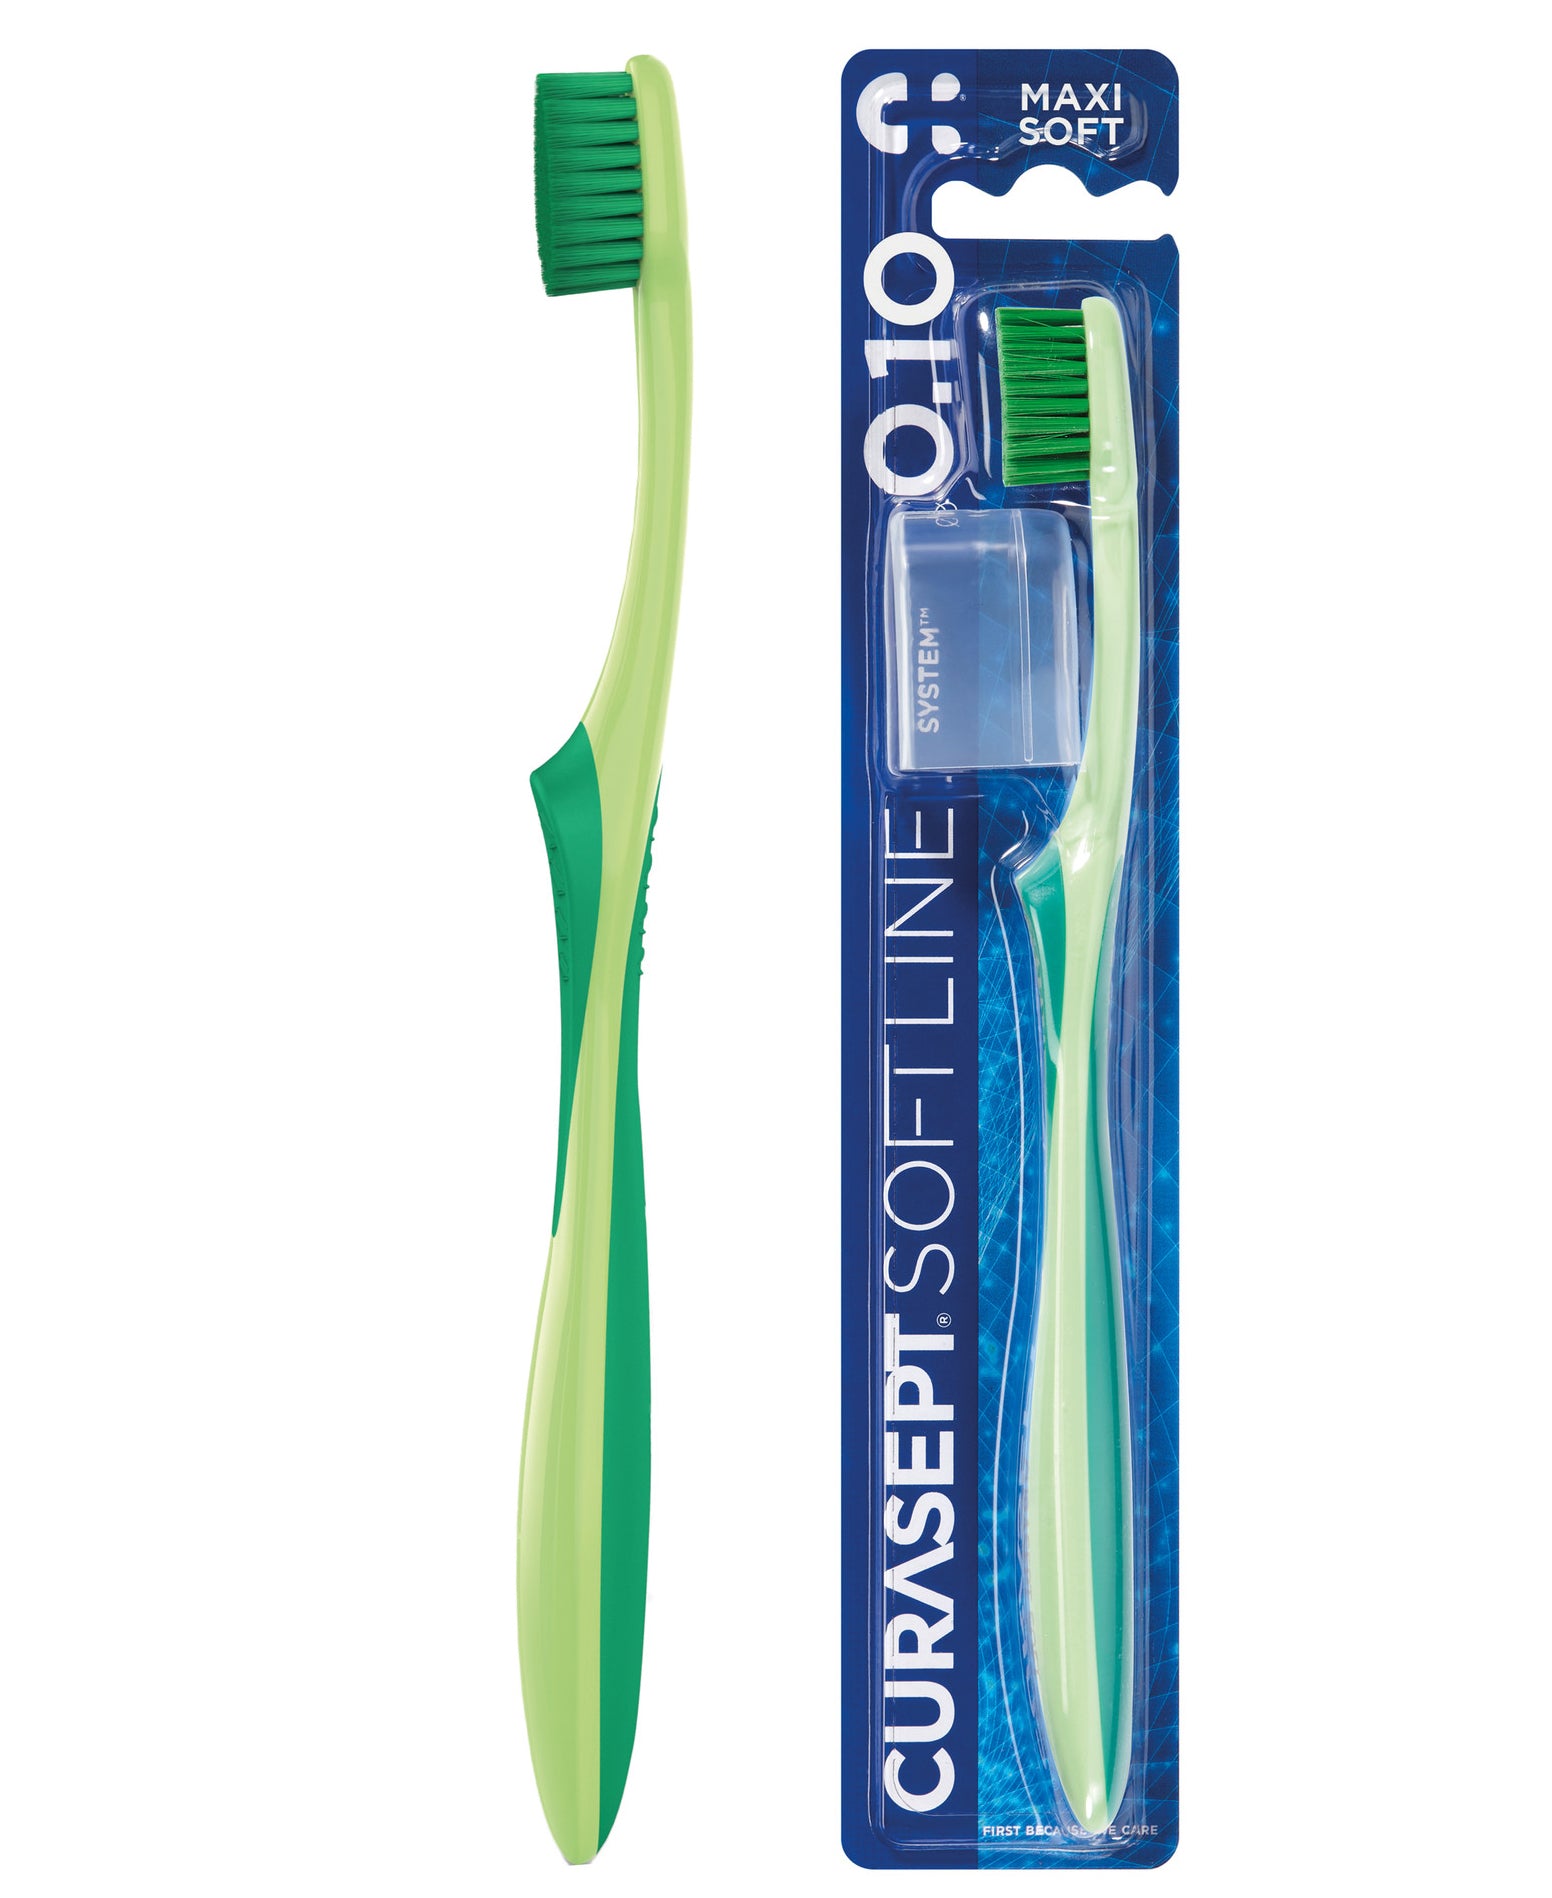 Curasept Softline Maxi Soft 010 Toothbrush